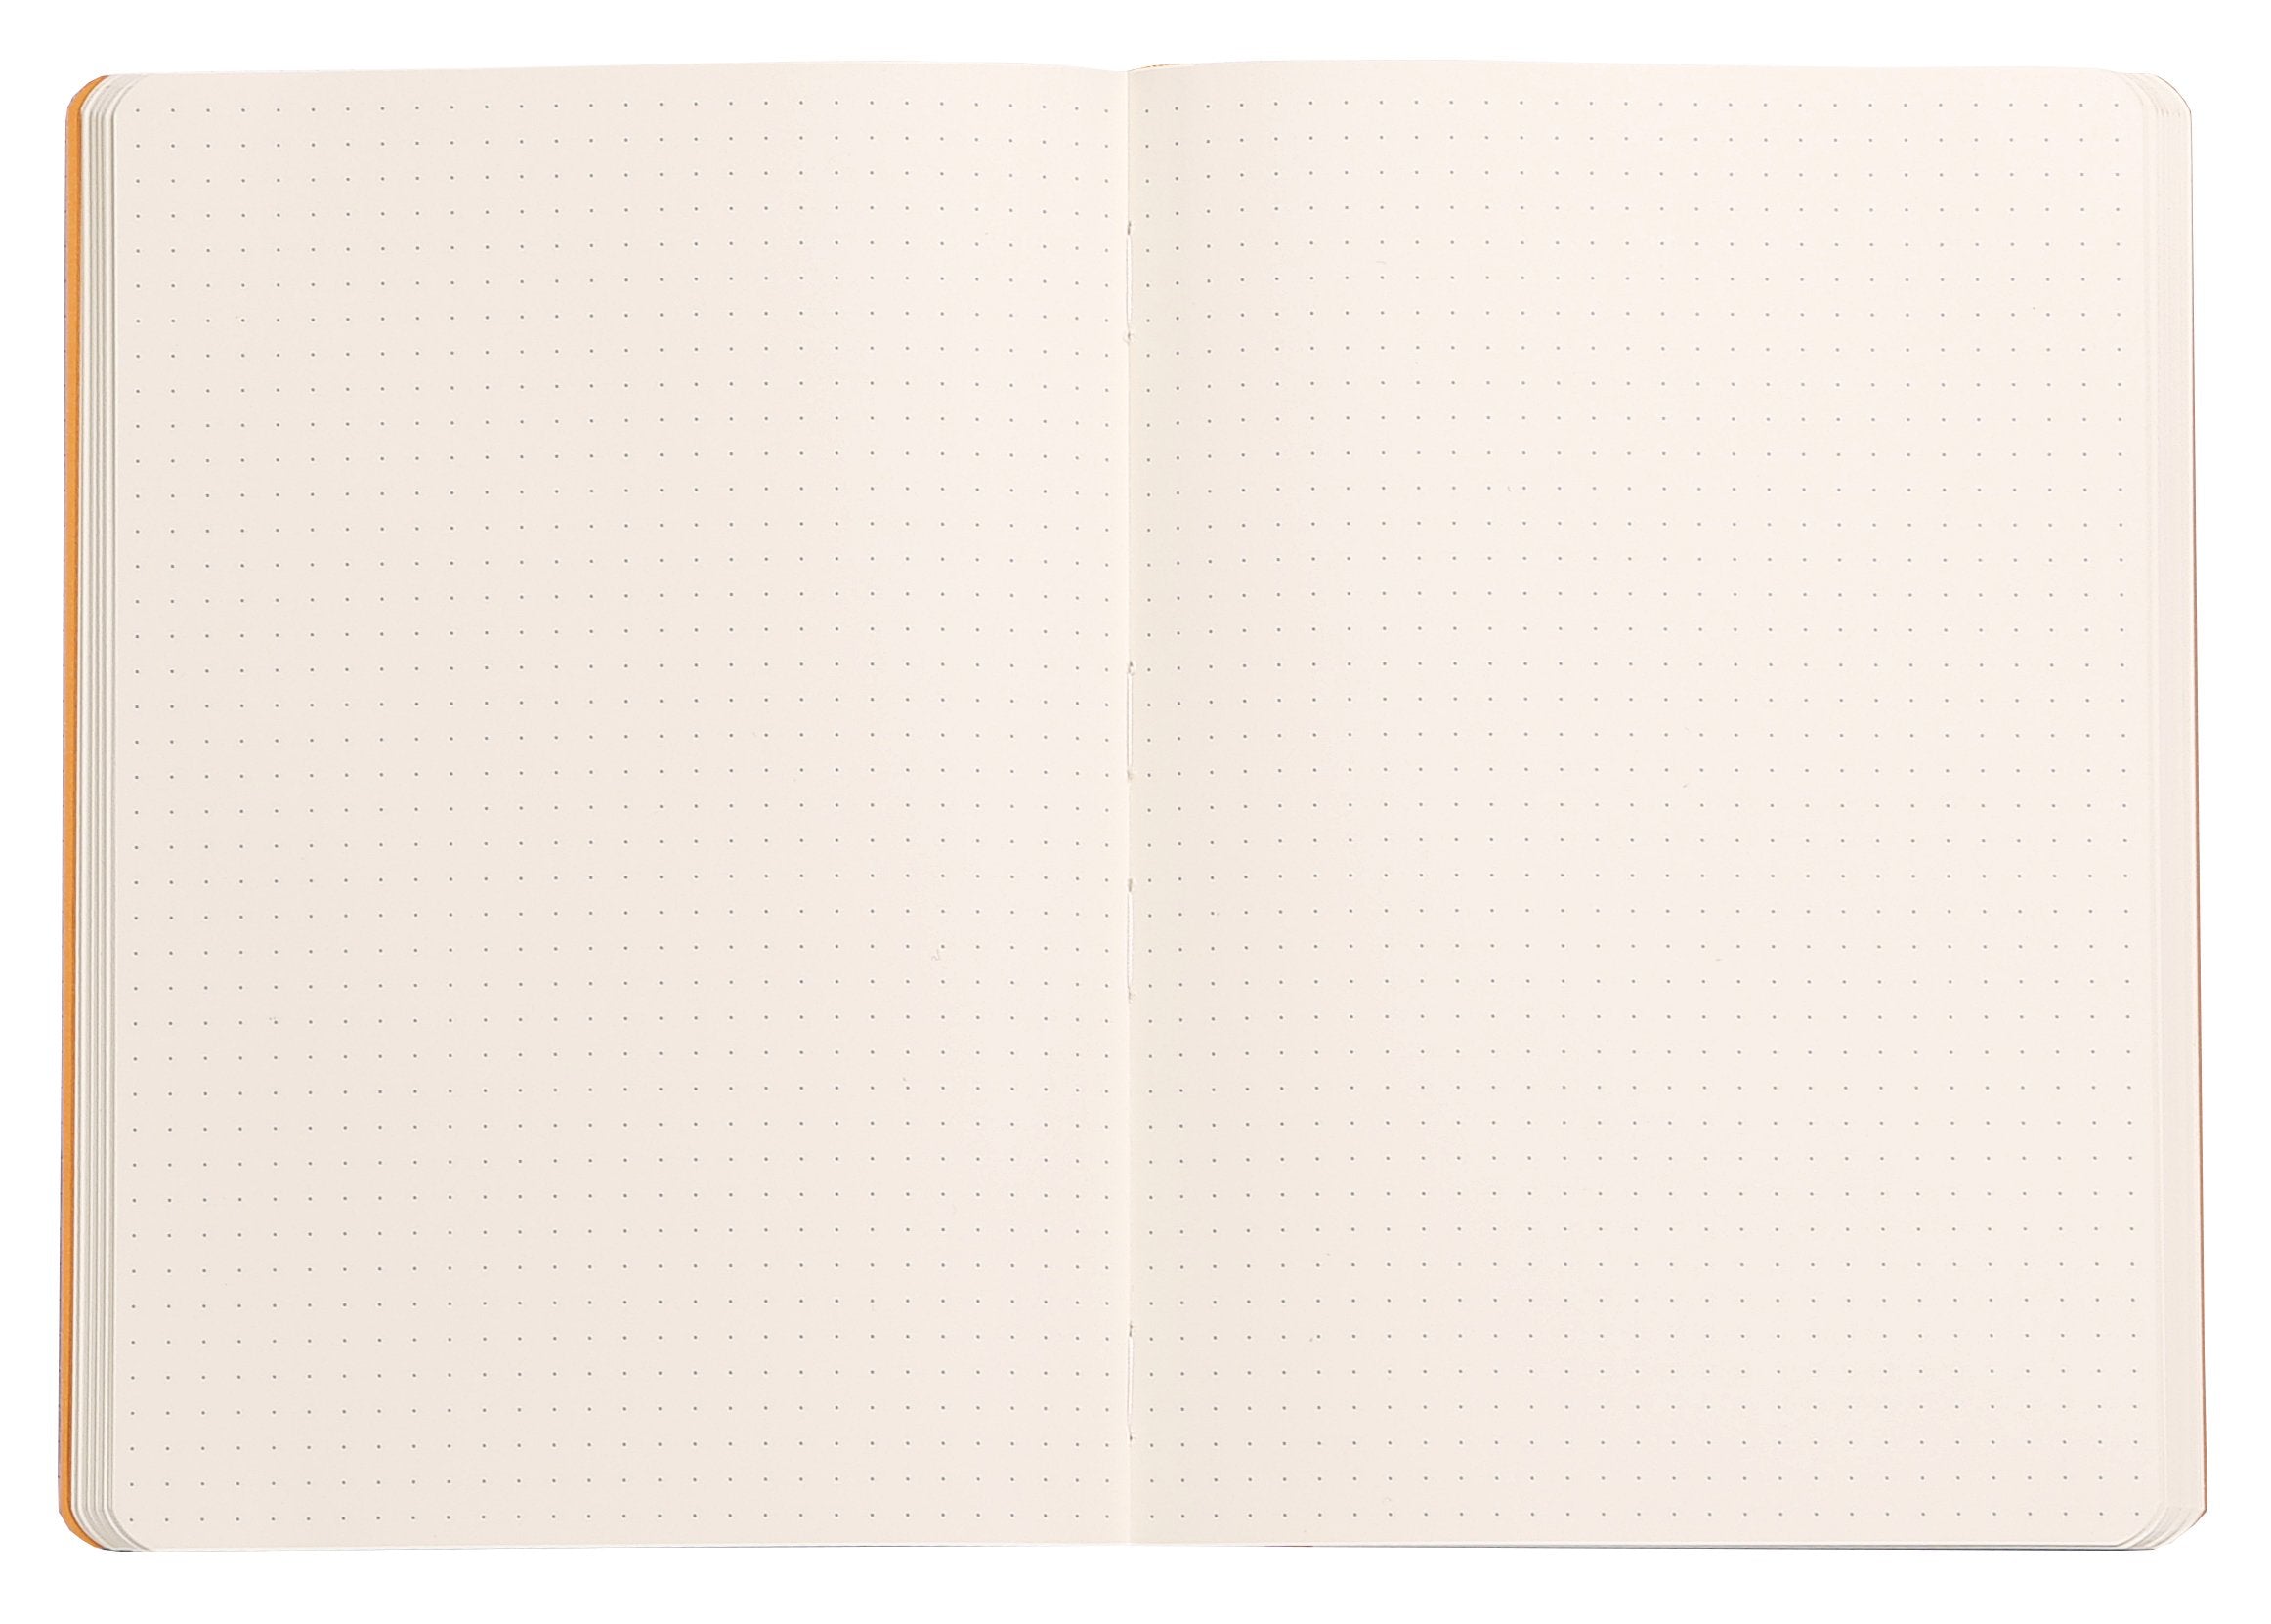 Rhodia - Notebook A5 Soft Cover - Fuchsia-Notitieboek-DutchMills